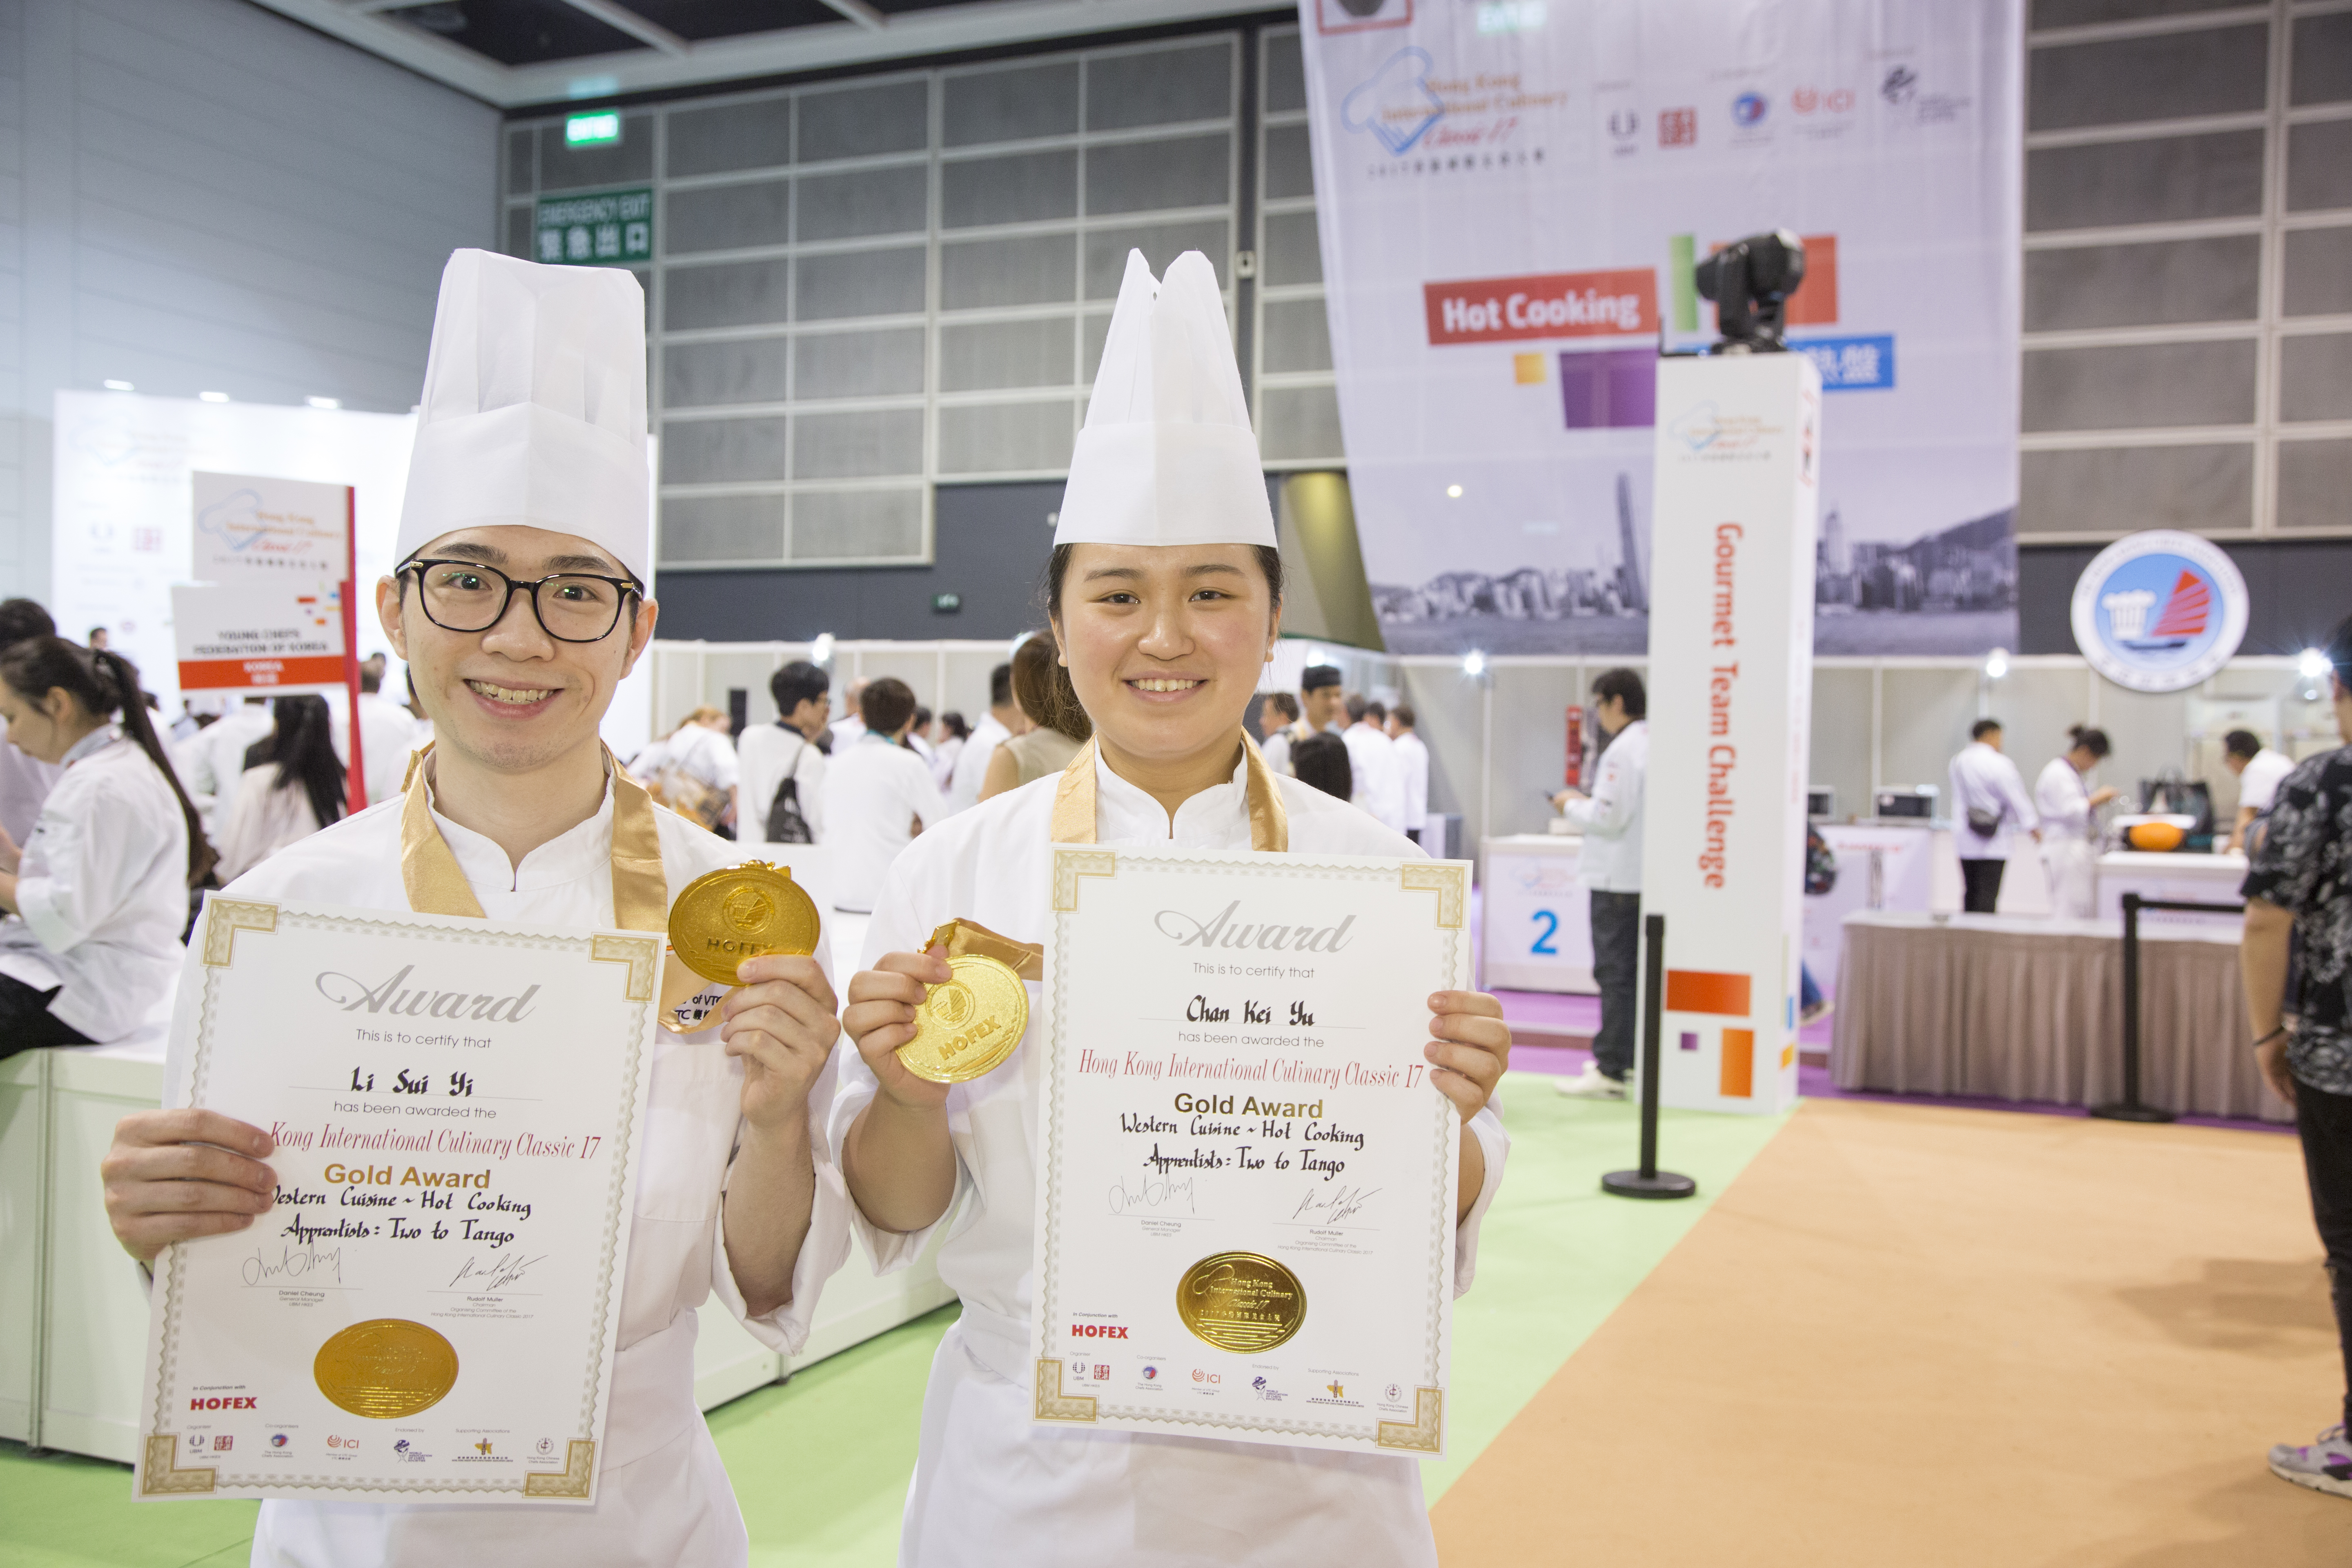 Hong Kong International Culinary Classic in HOFEX 2017